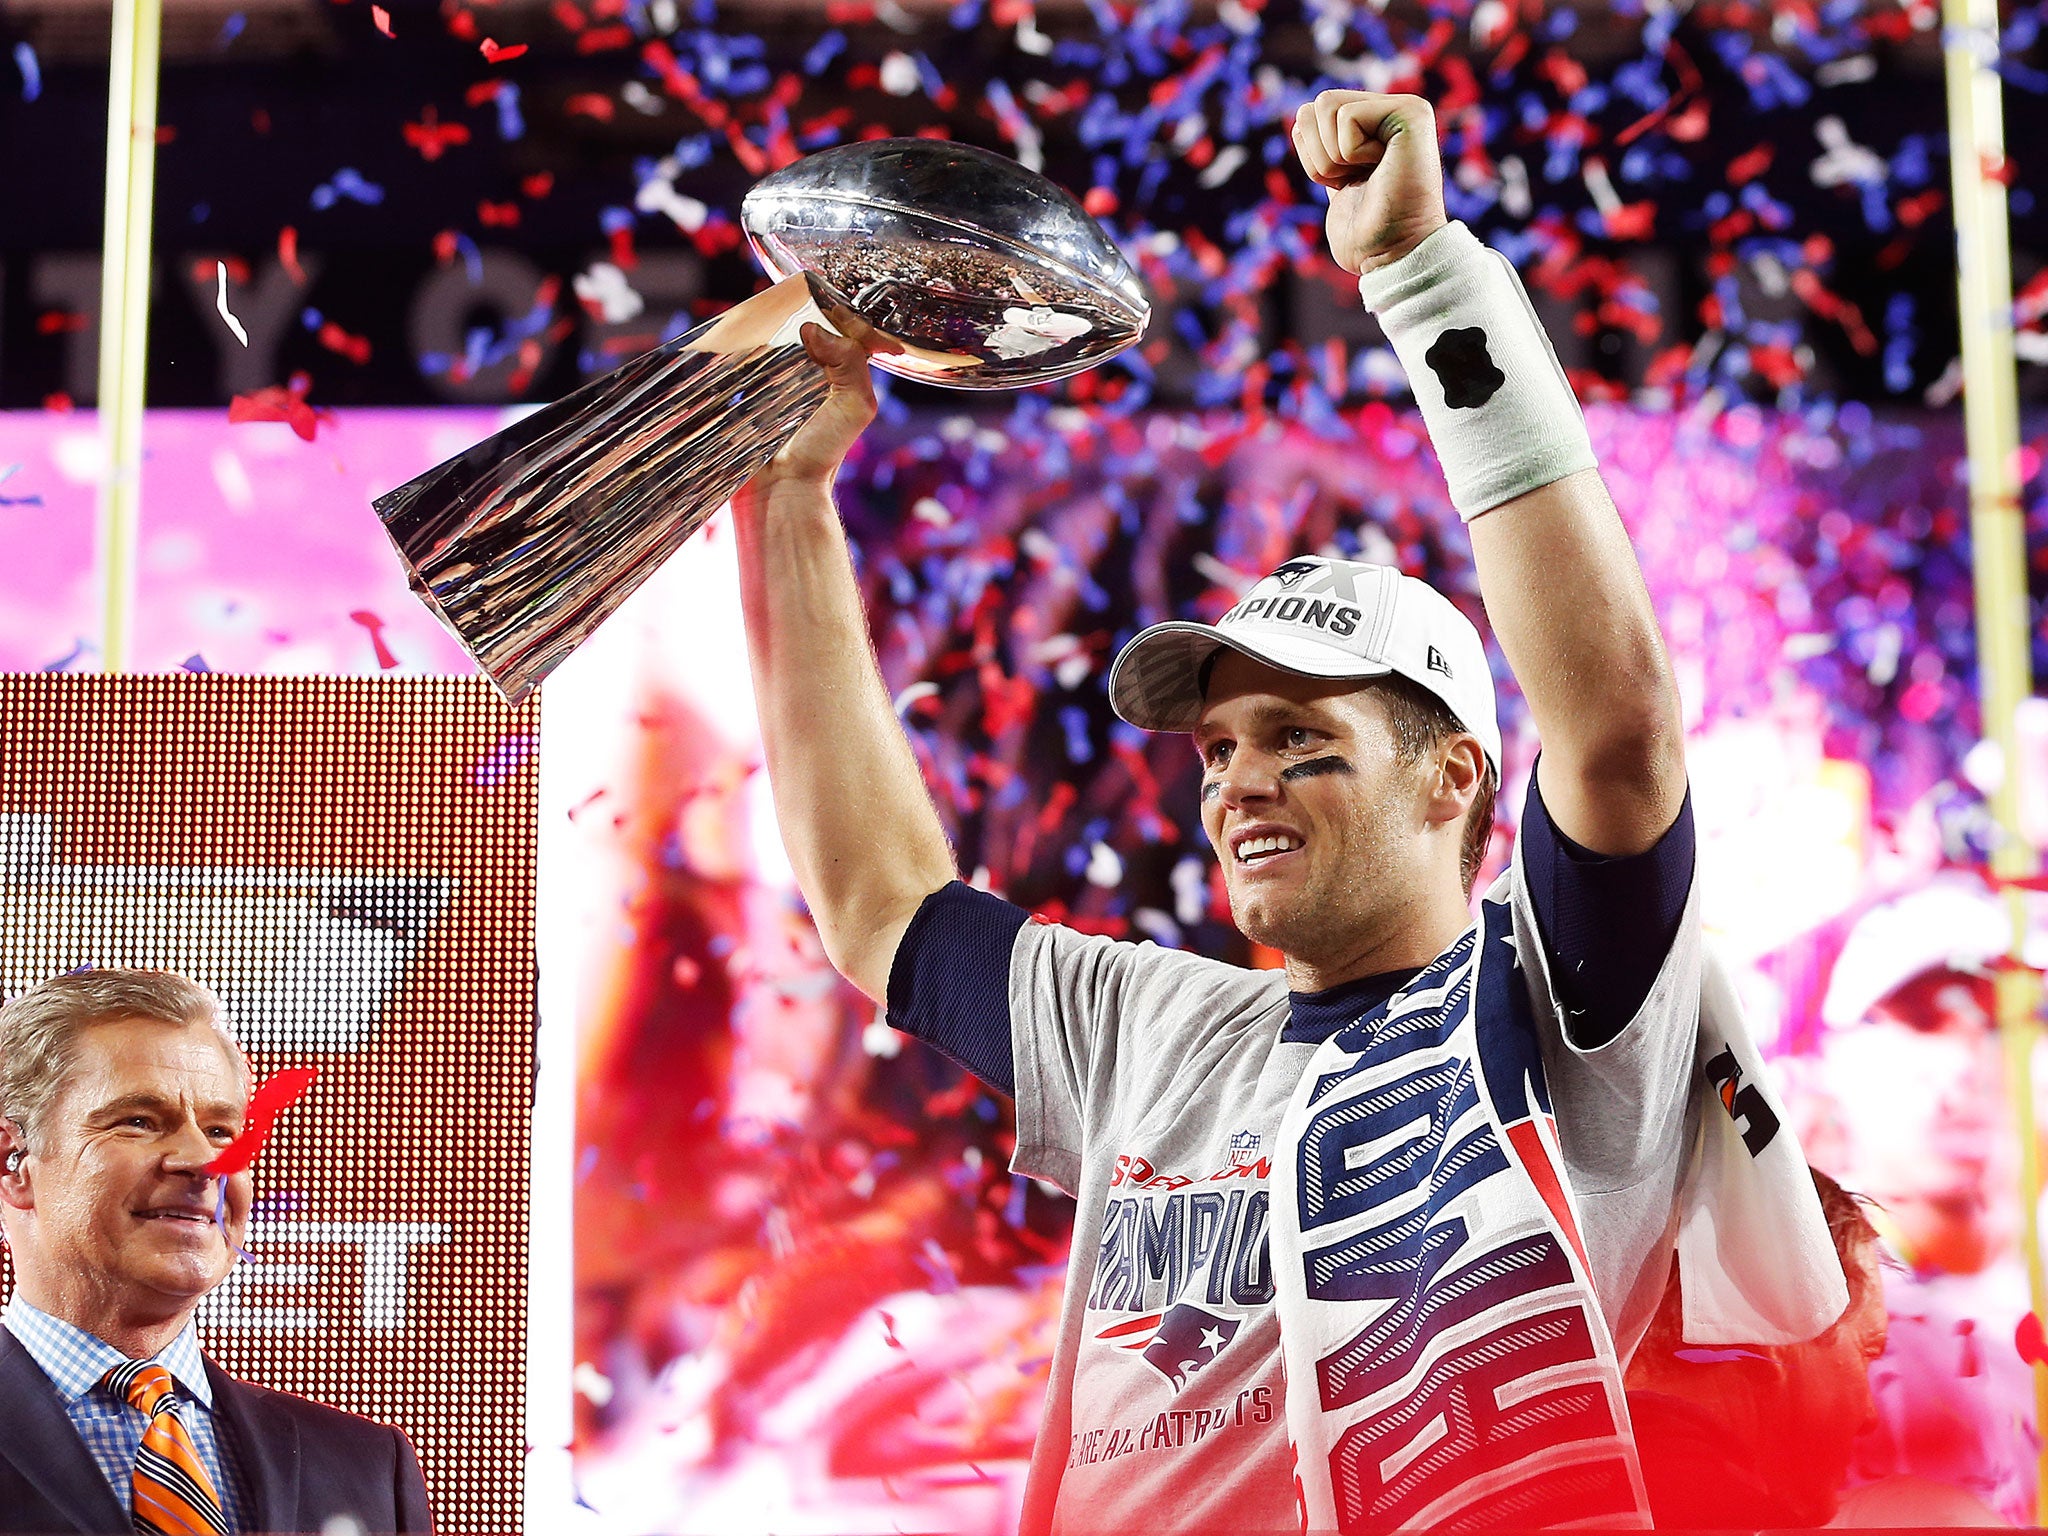 Tom Brady lifts the Super Bowl trophy